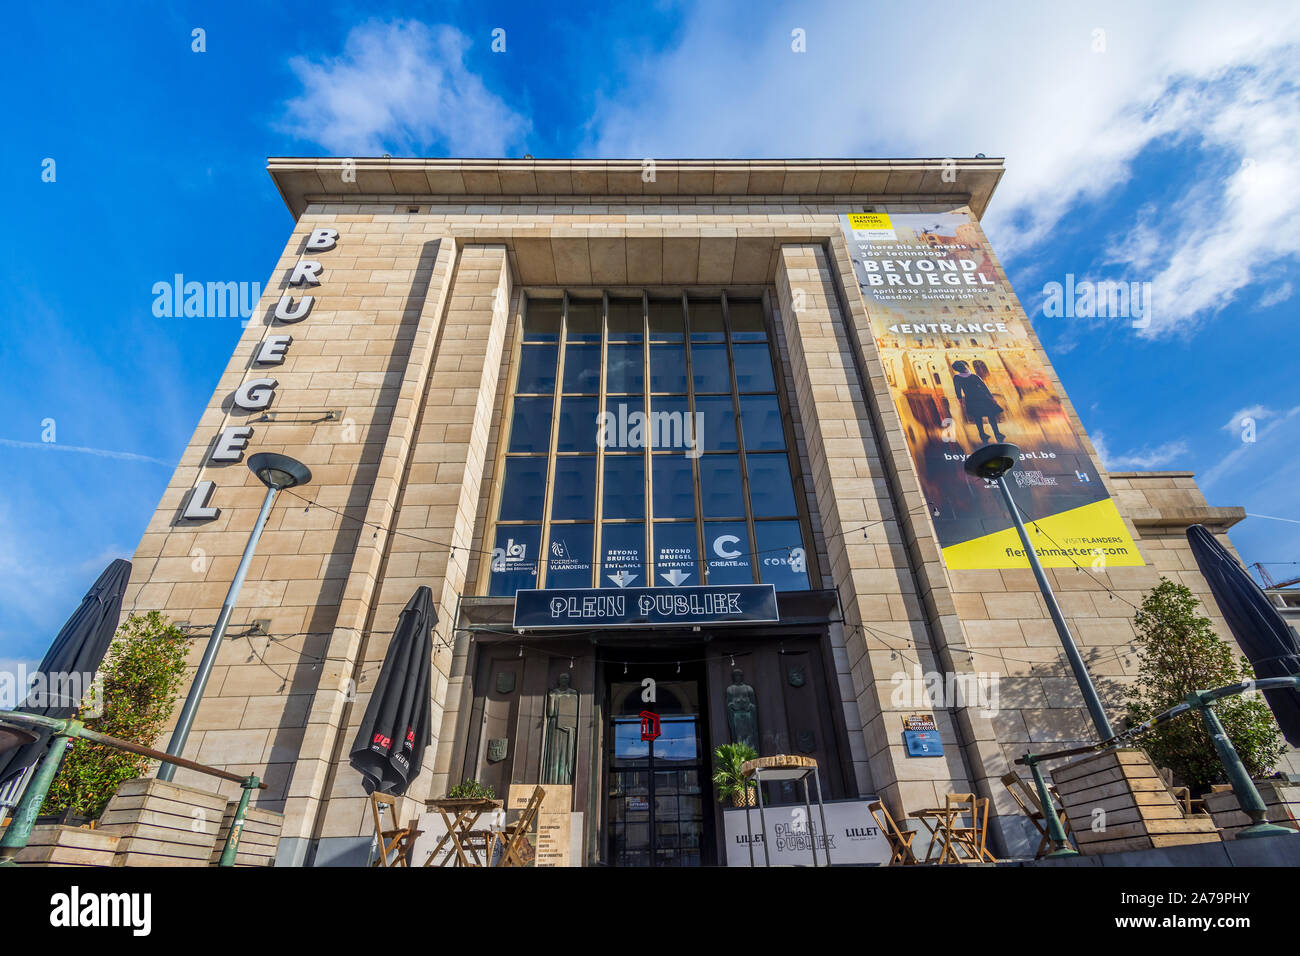 Maison de la Dynastie mit dem Maler Peter Bruegel Ausstellung, Mont des Arts, Brüssel, Belgien Stockfoto